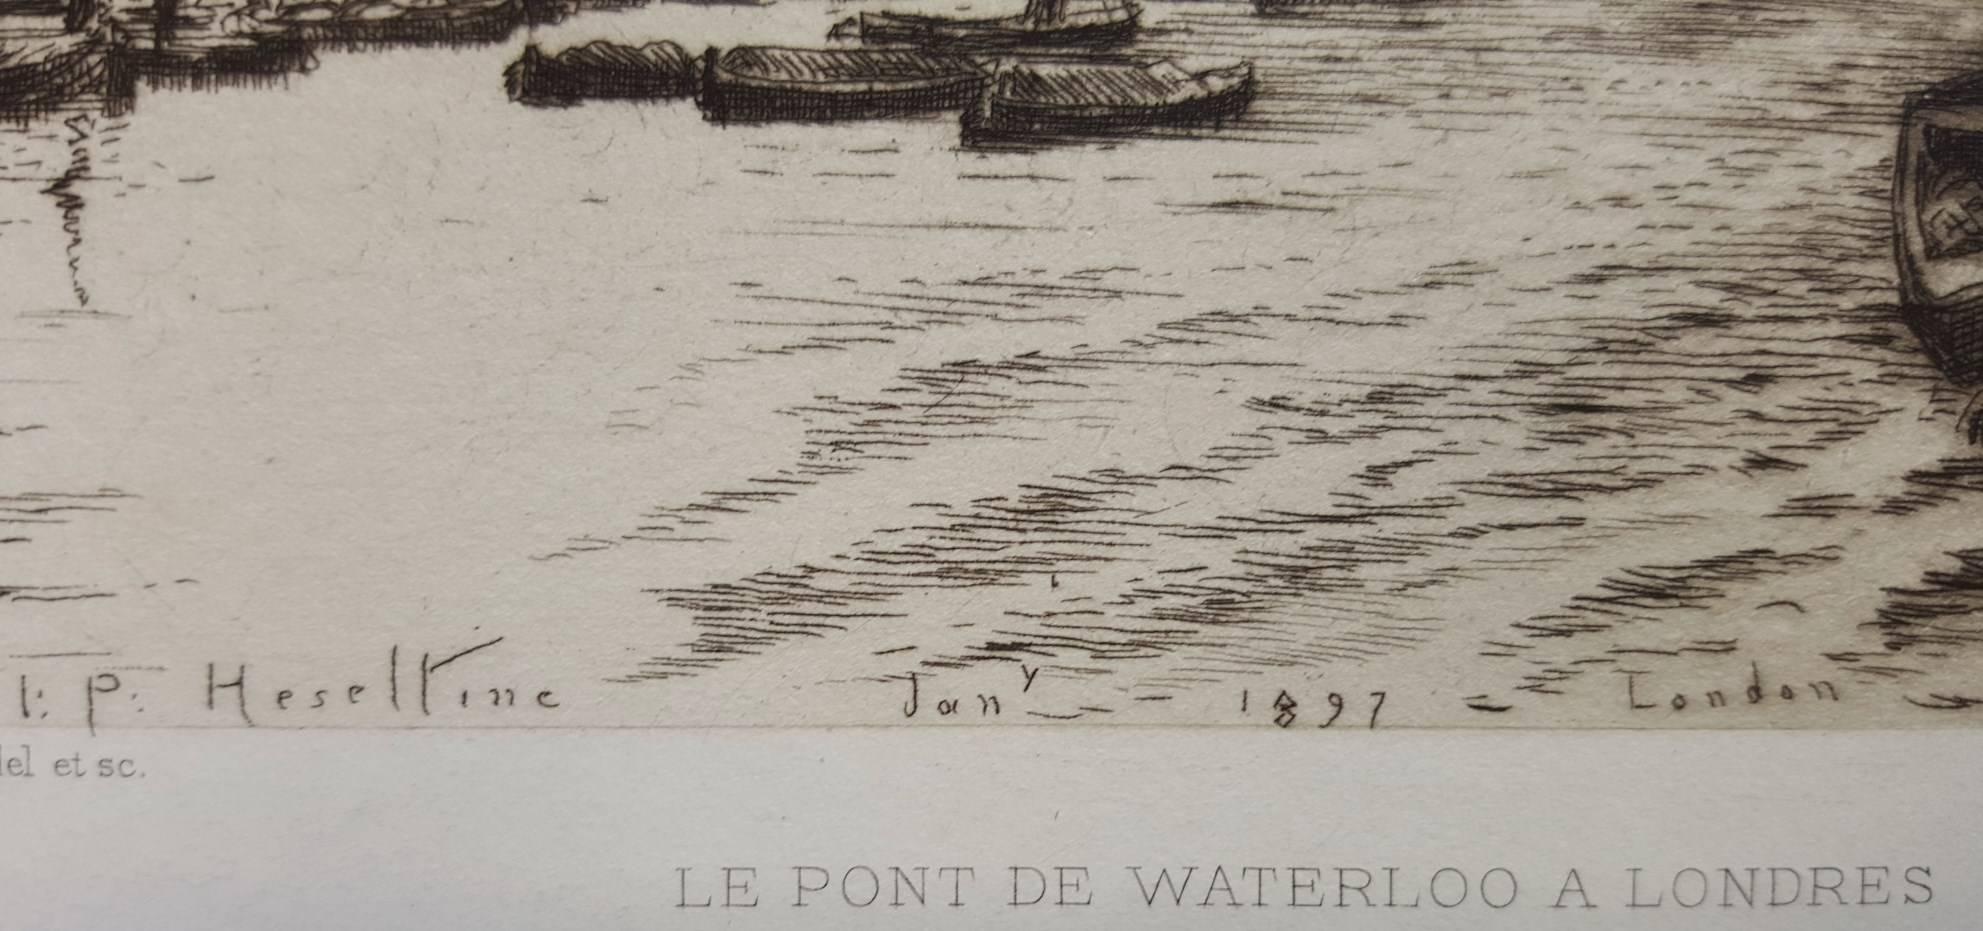 Le Pont de Waterloo, a Londres - Impressionist Print by John Postle Heseltine